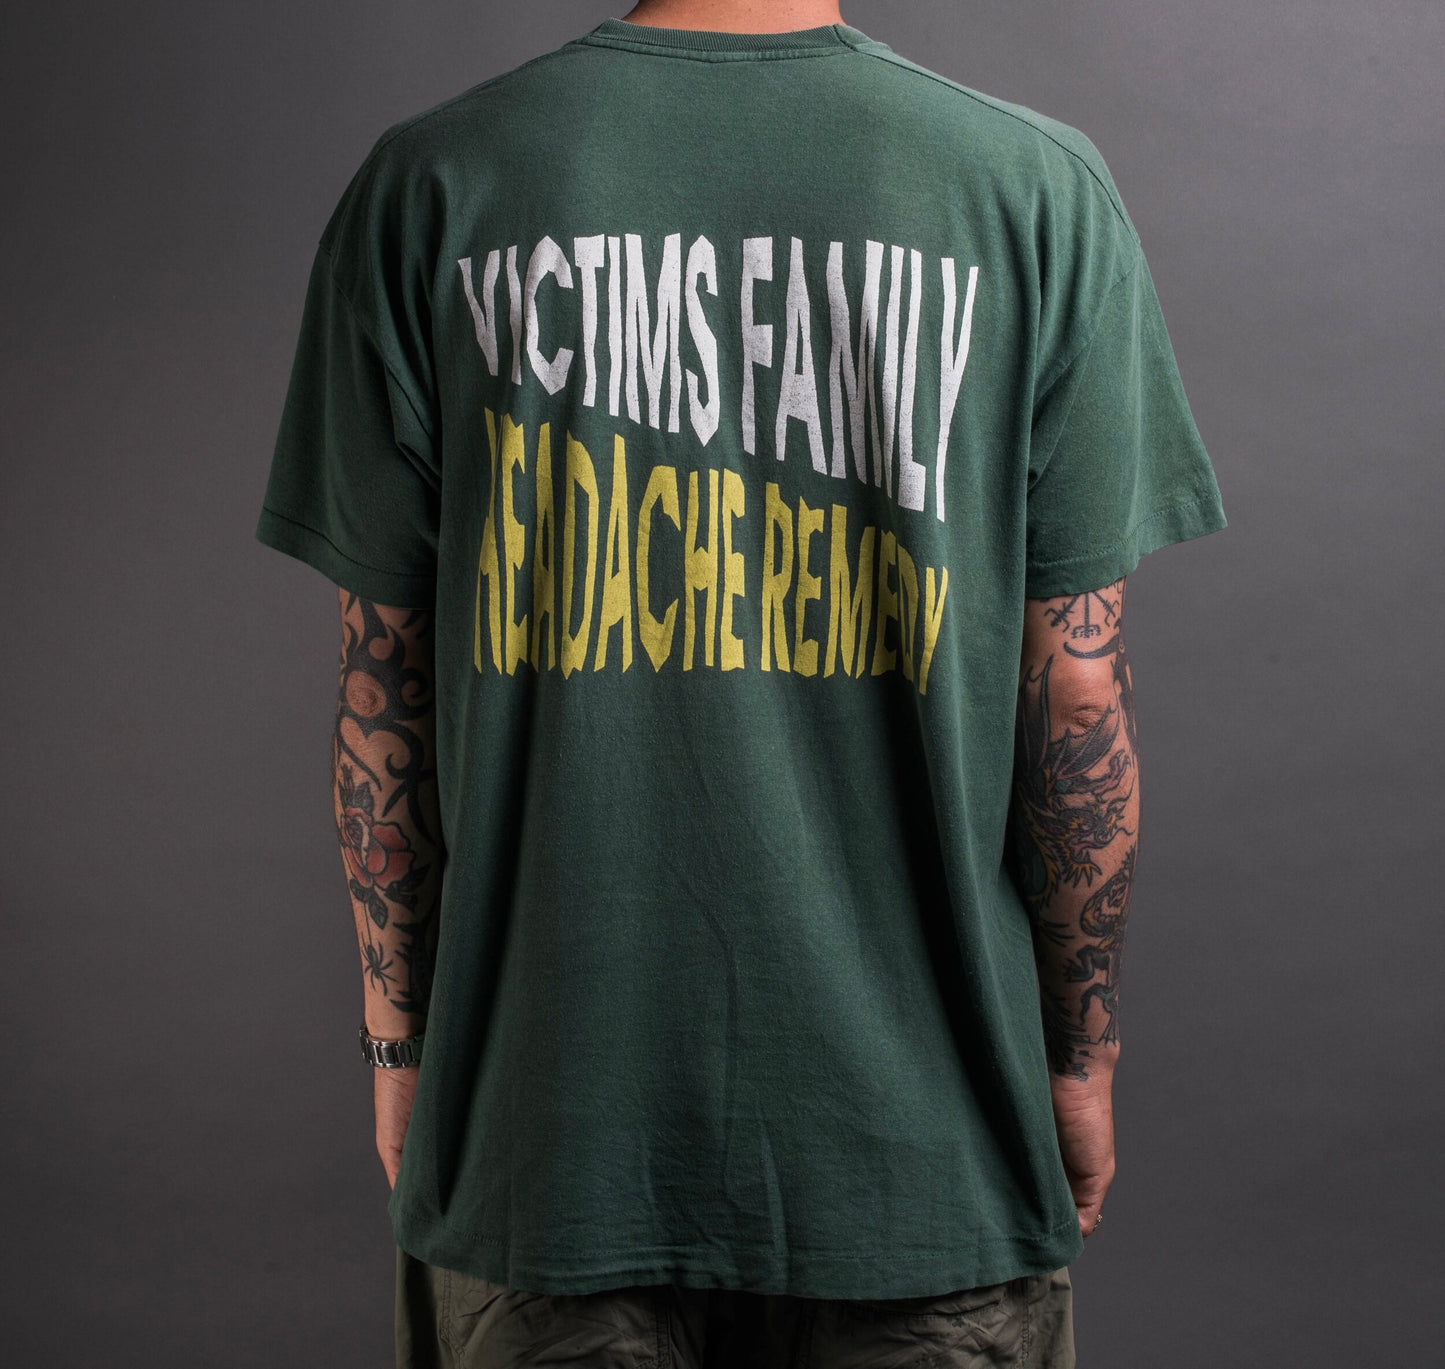 Vintage 90’s Victims Family Headache Remedy T-Shirt